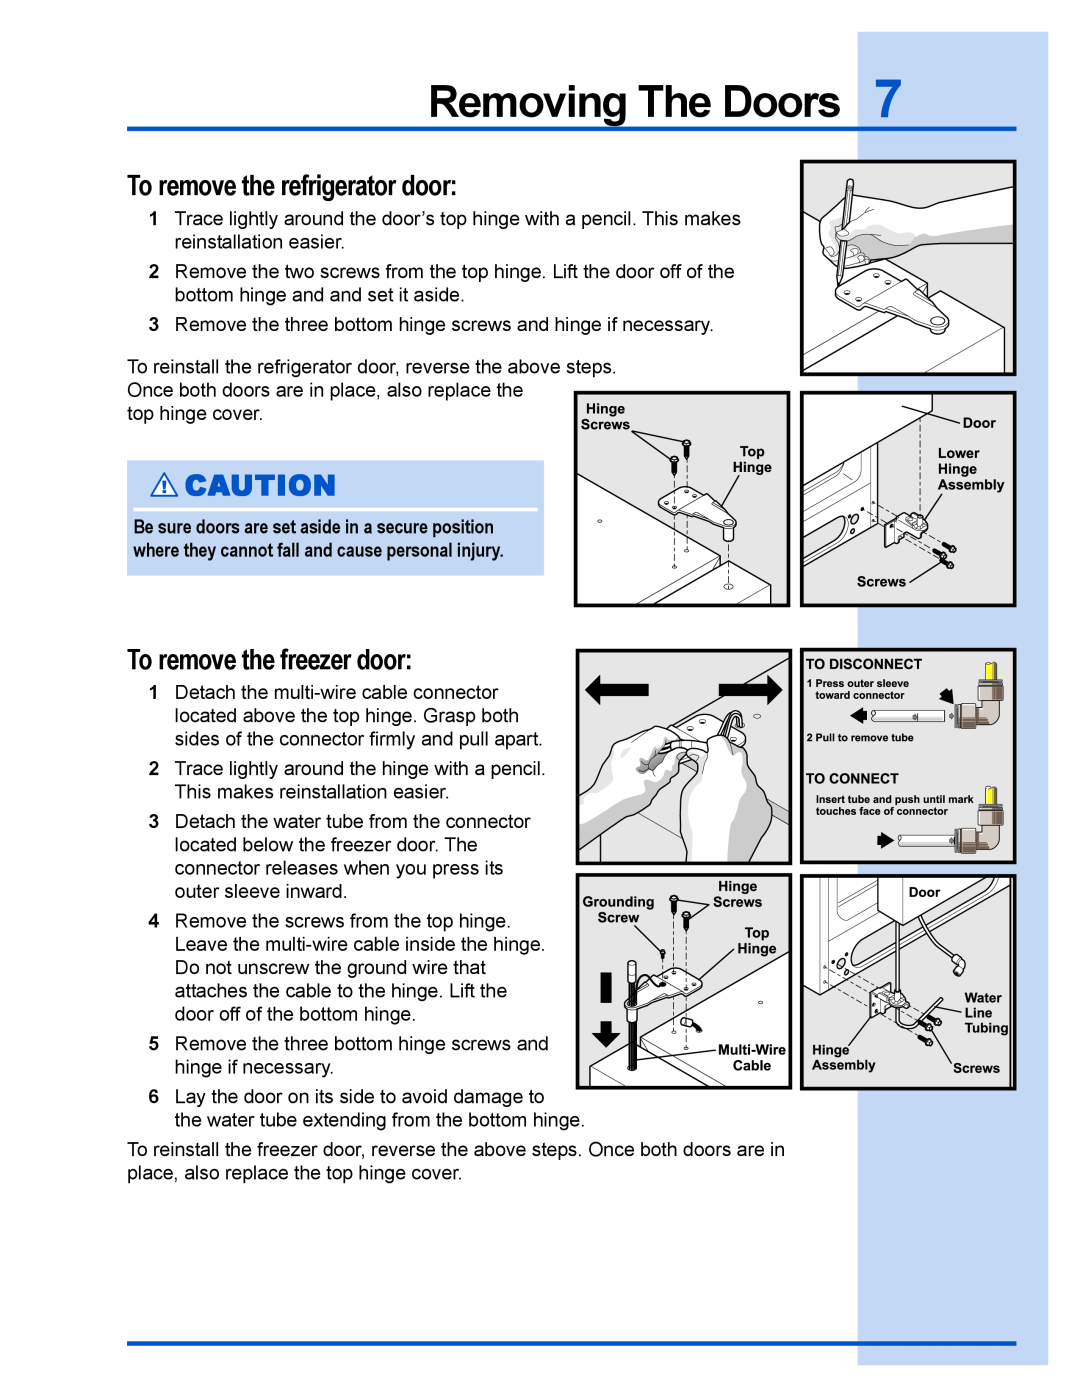 Electrolux U30024 manual Removing The Doors, To remove the refrigerator door, To remove the freezer door 